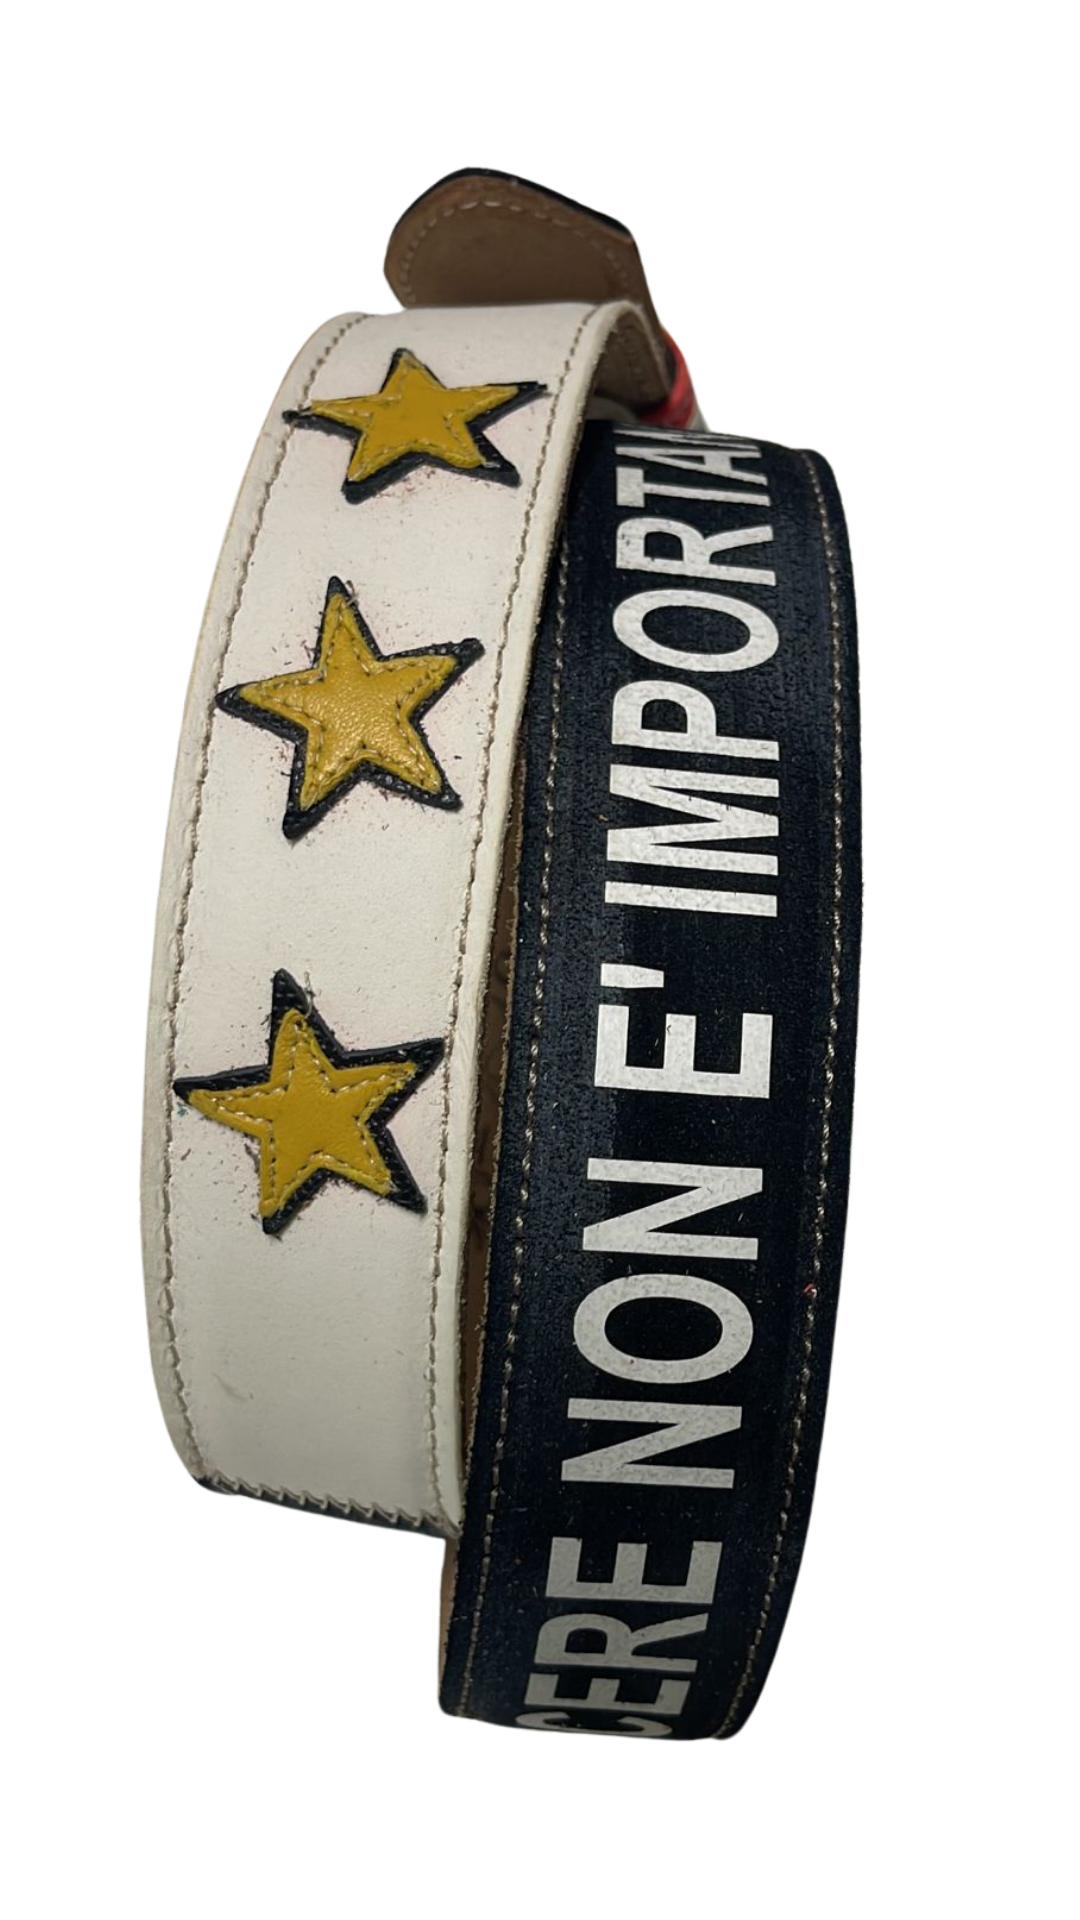 Artisan 'Bianconera' Leather Belt with Tricolor Details